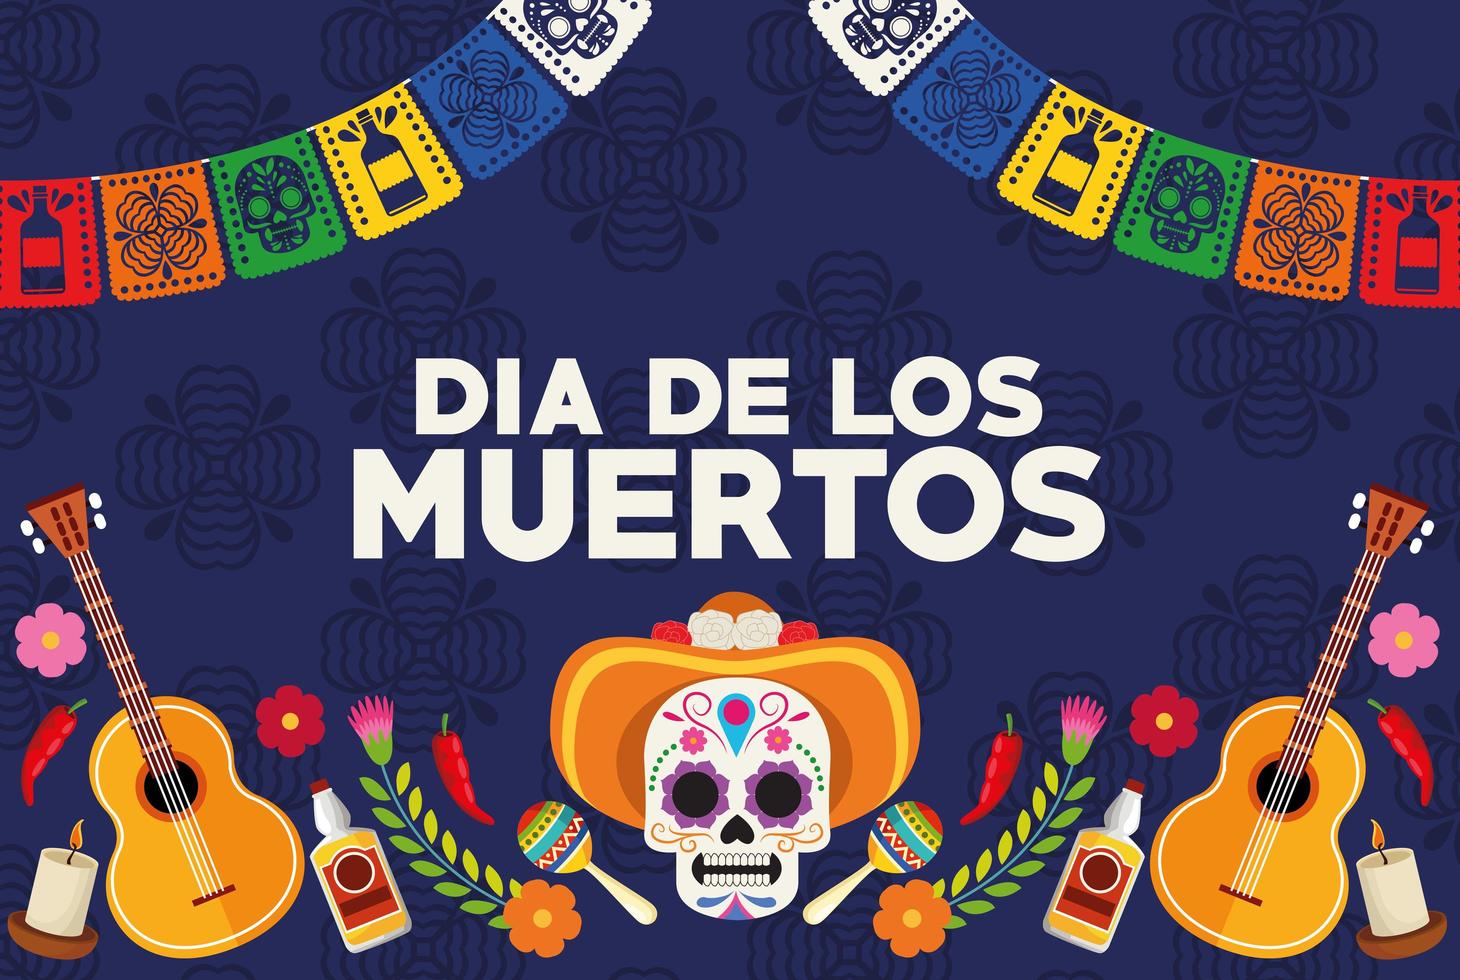 dia de los muertos celebration poster with skull head wearing hat and guitars vector